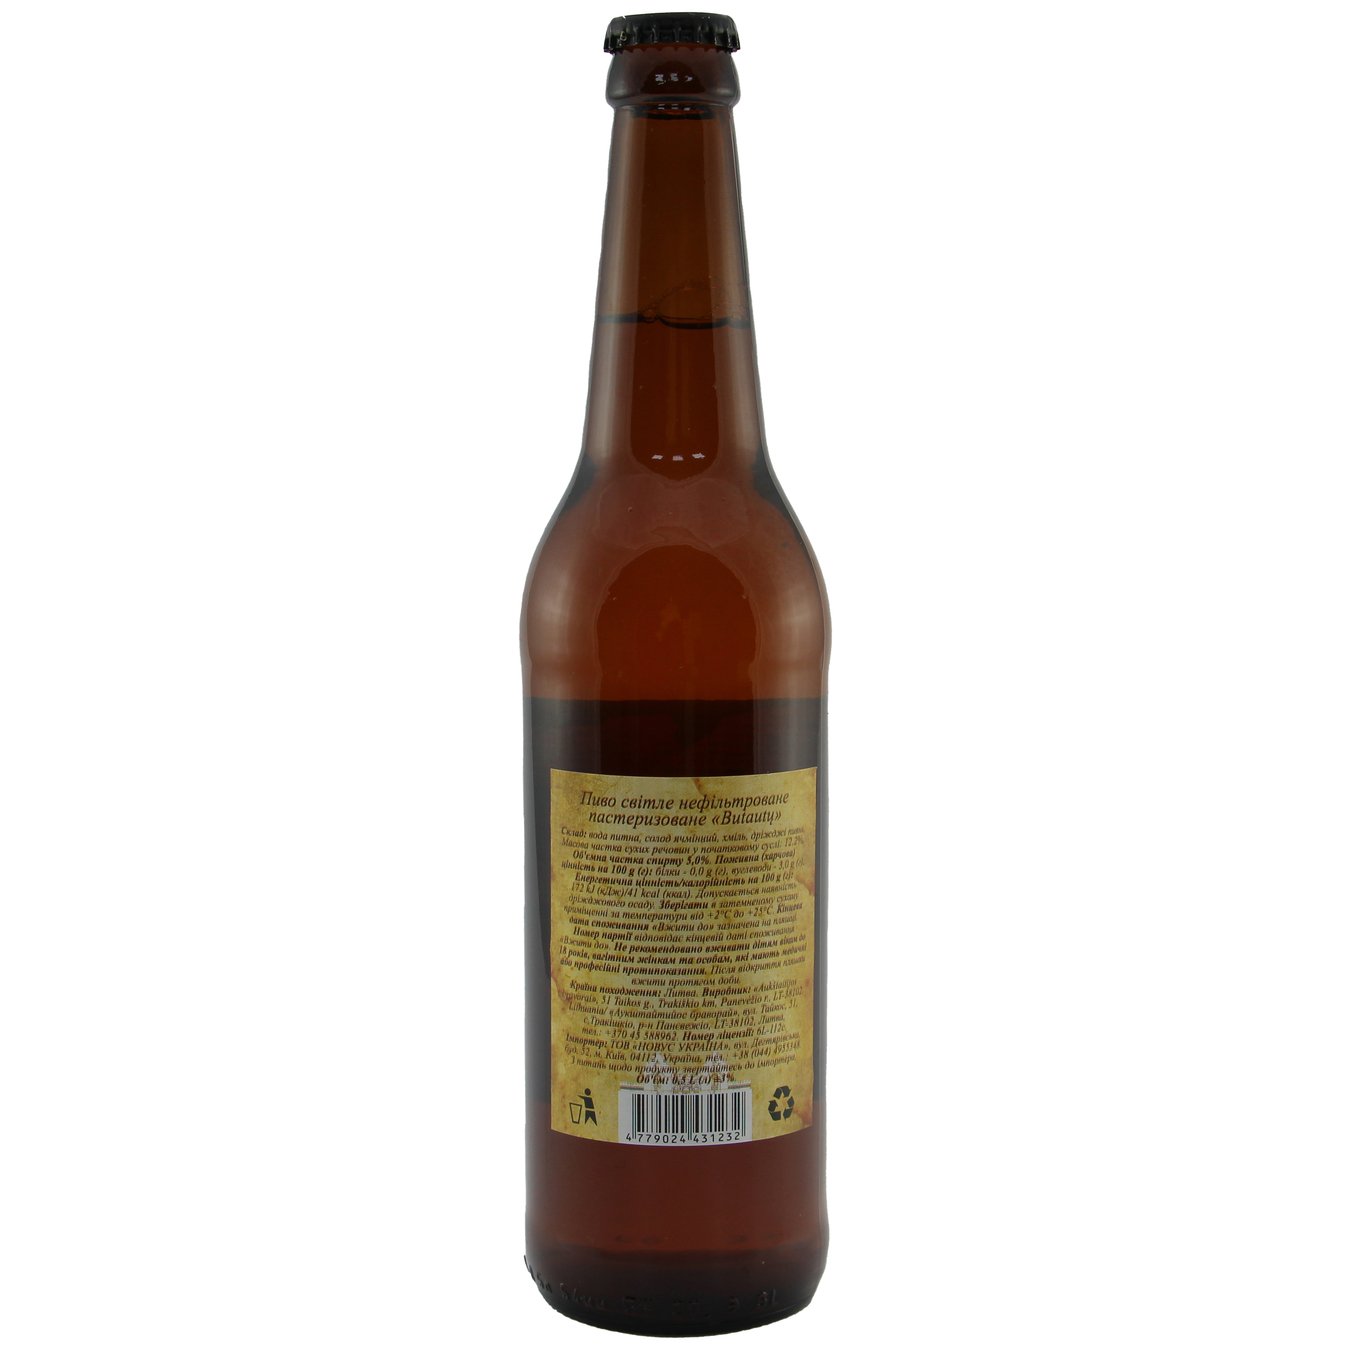 Butautu Sviesusis alus unfiltered light beer 5% 0,5l 2